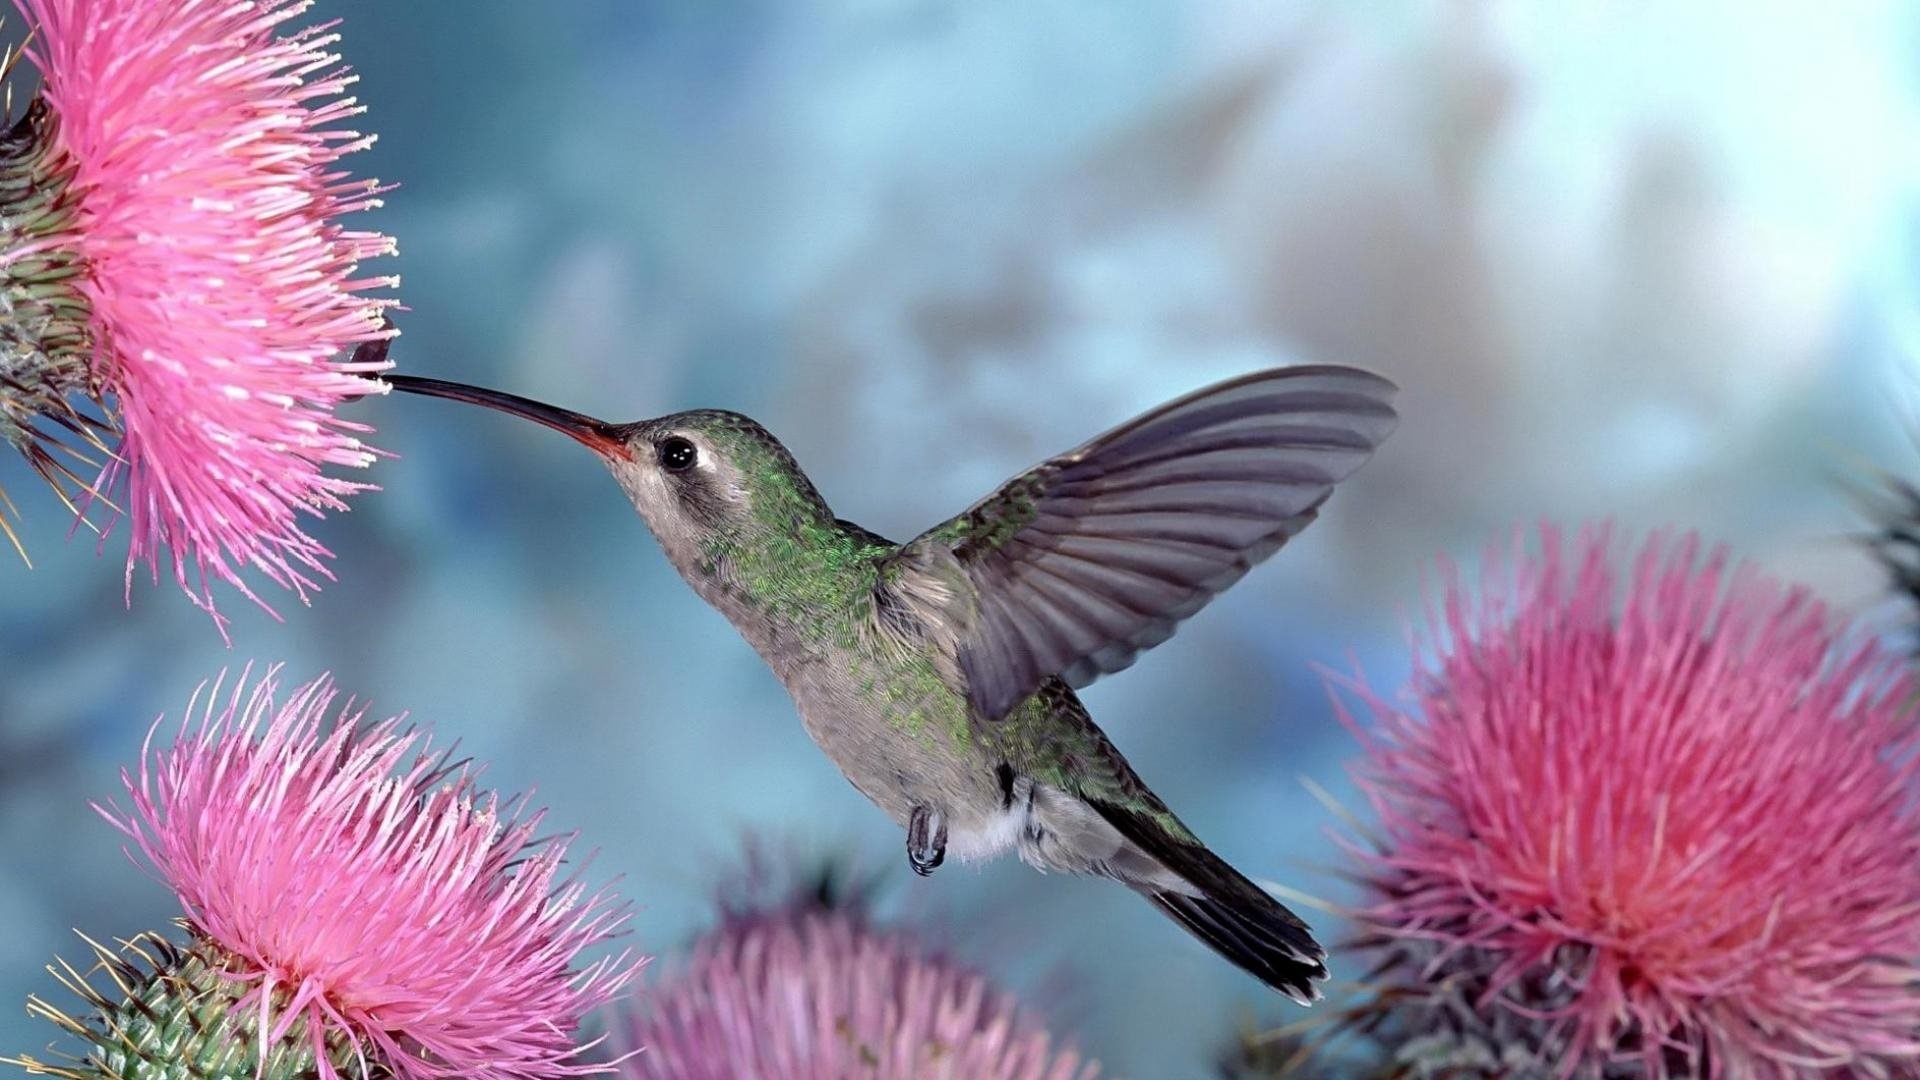 Graceful hummingbird, Nature's gem, Vibrant jewel, Colorful feathers, 1920x1080 Full HD Desktop